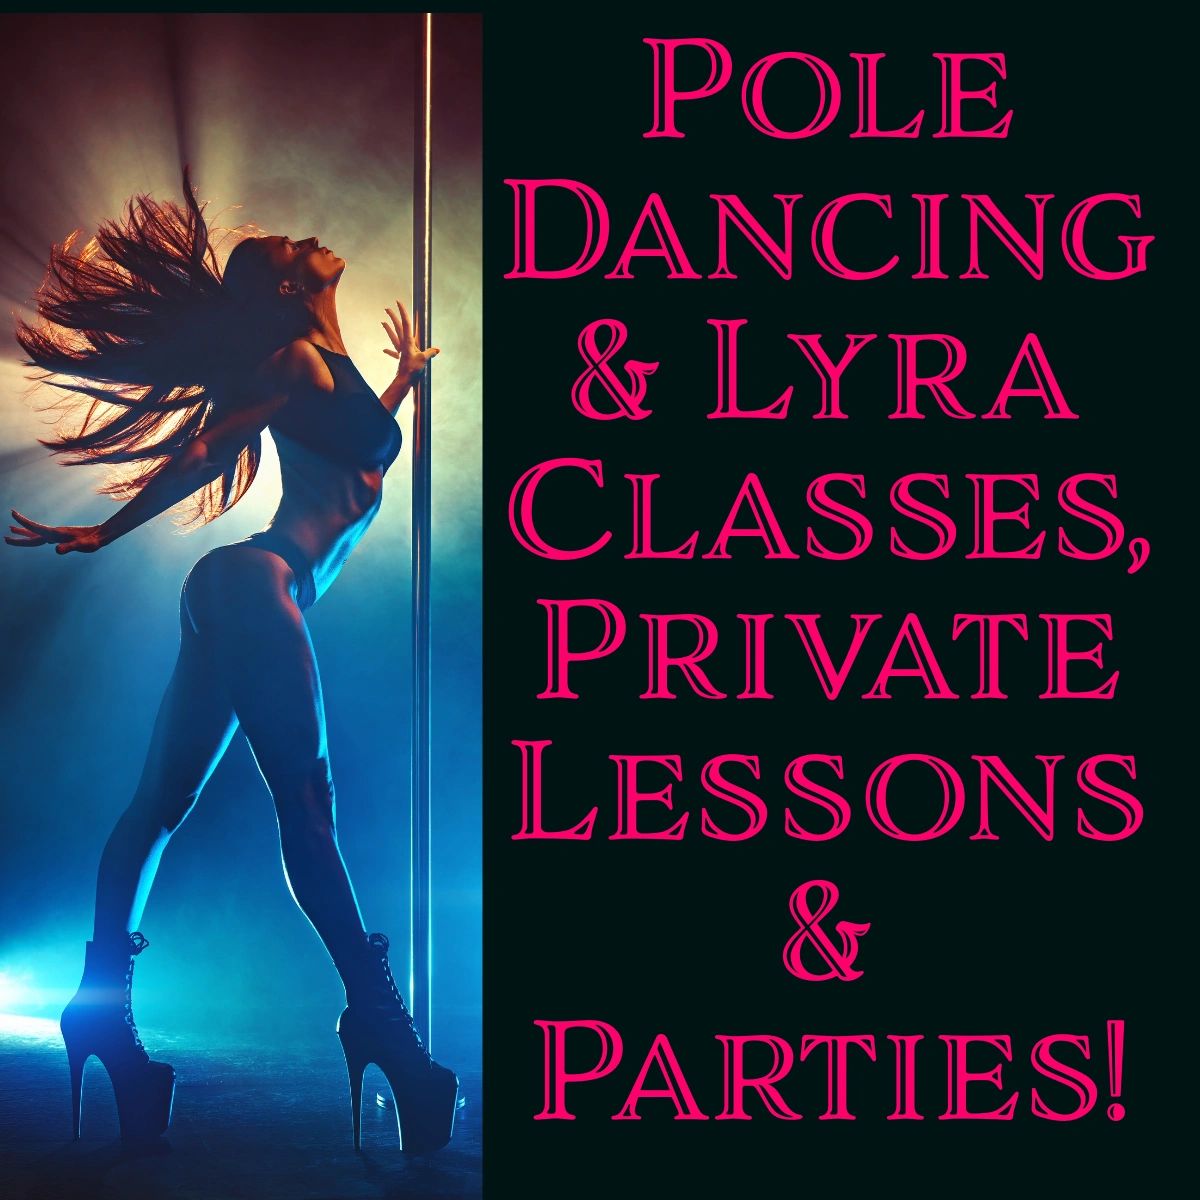 Dance Fitness, Pole Dance & Fitness, Sculpting Classes, & Parties